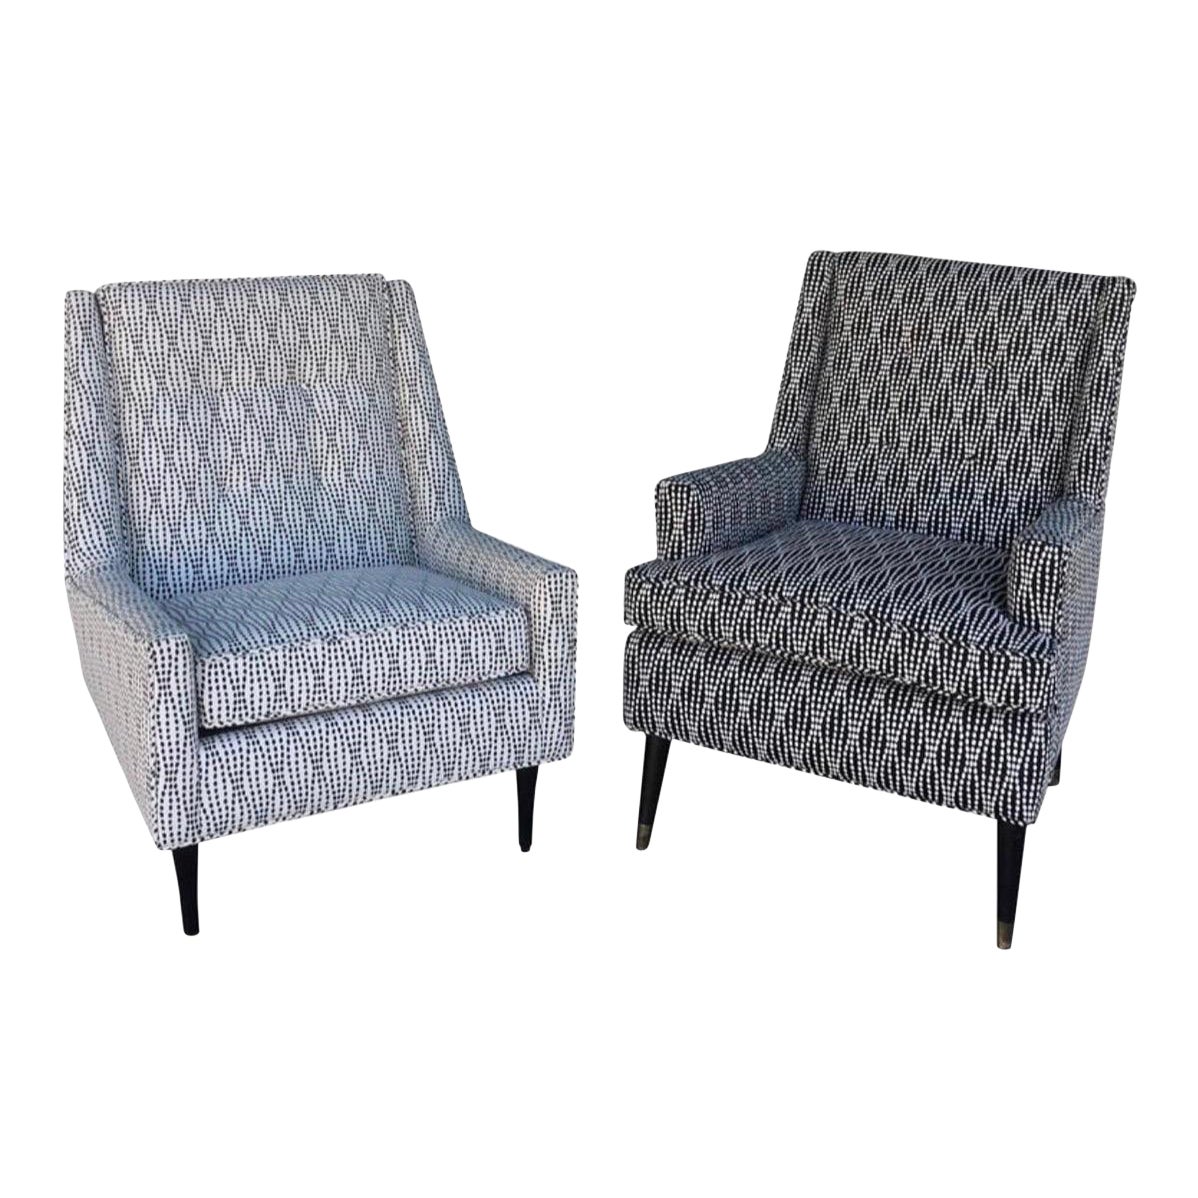  Pair of Mid-Century Modern Lounge Chairs New Black/White Geometric Fabric